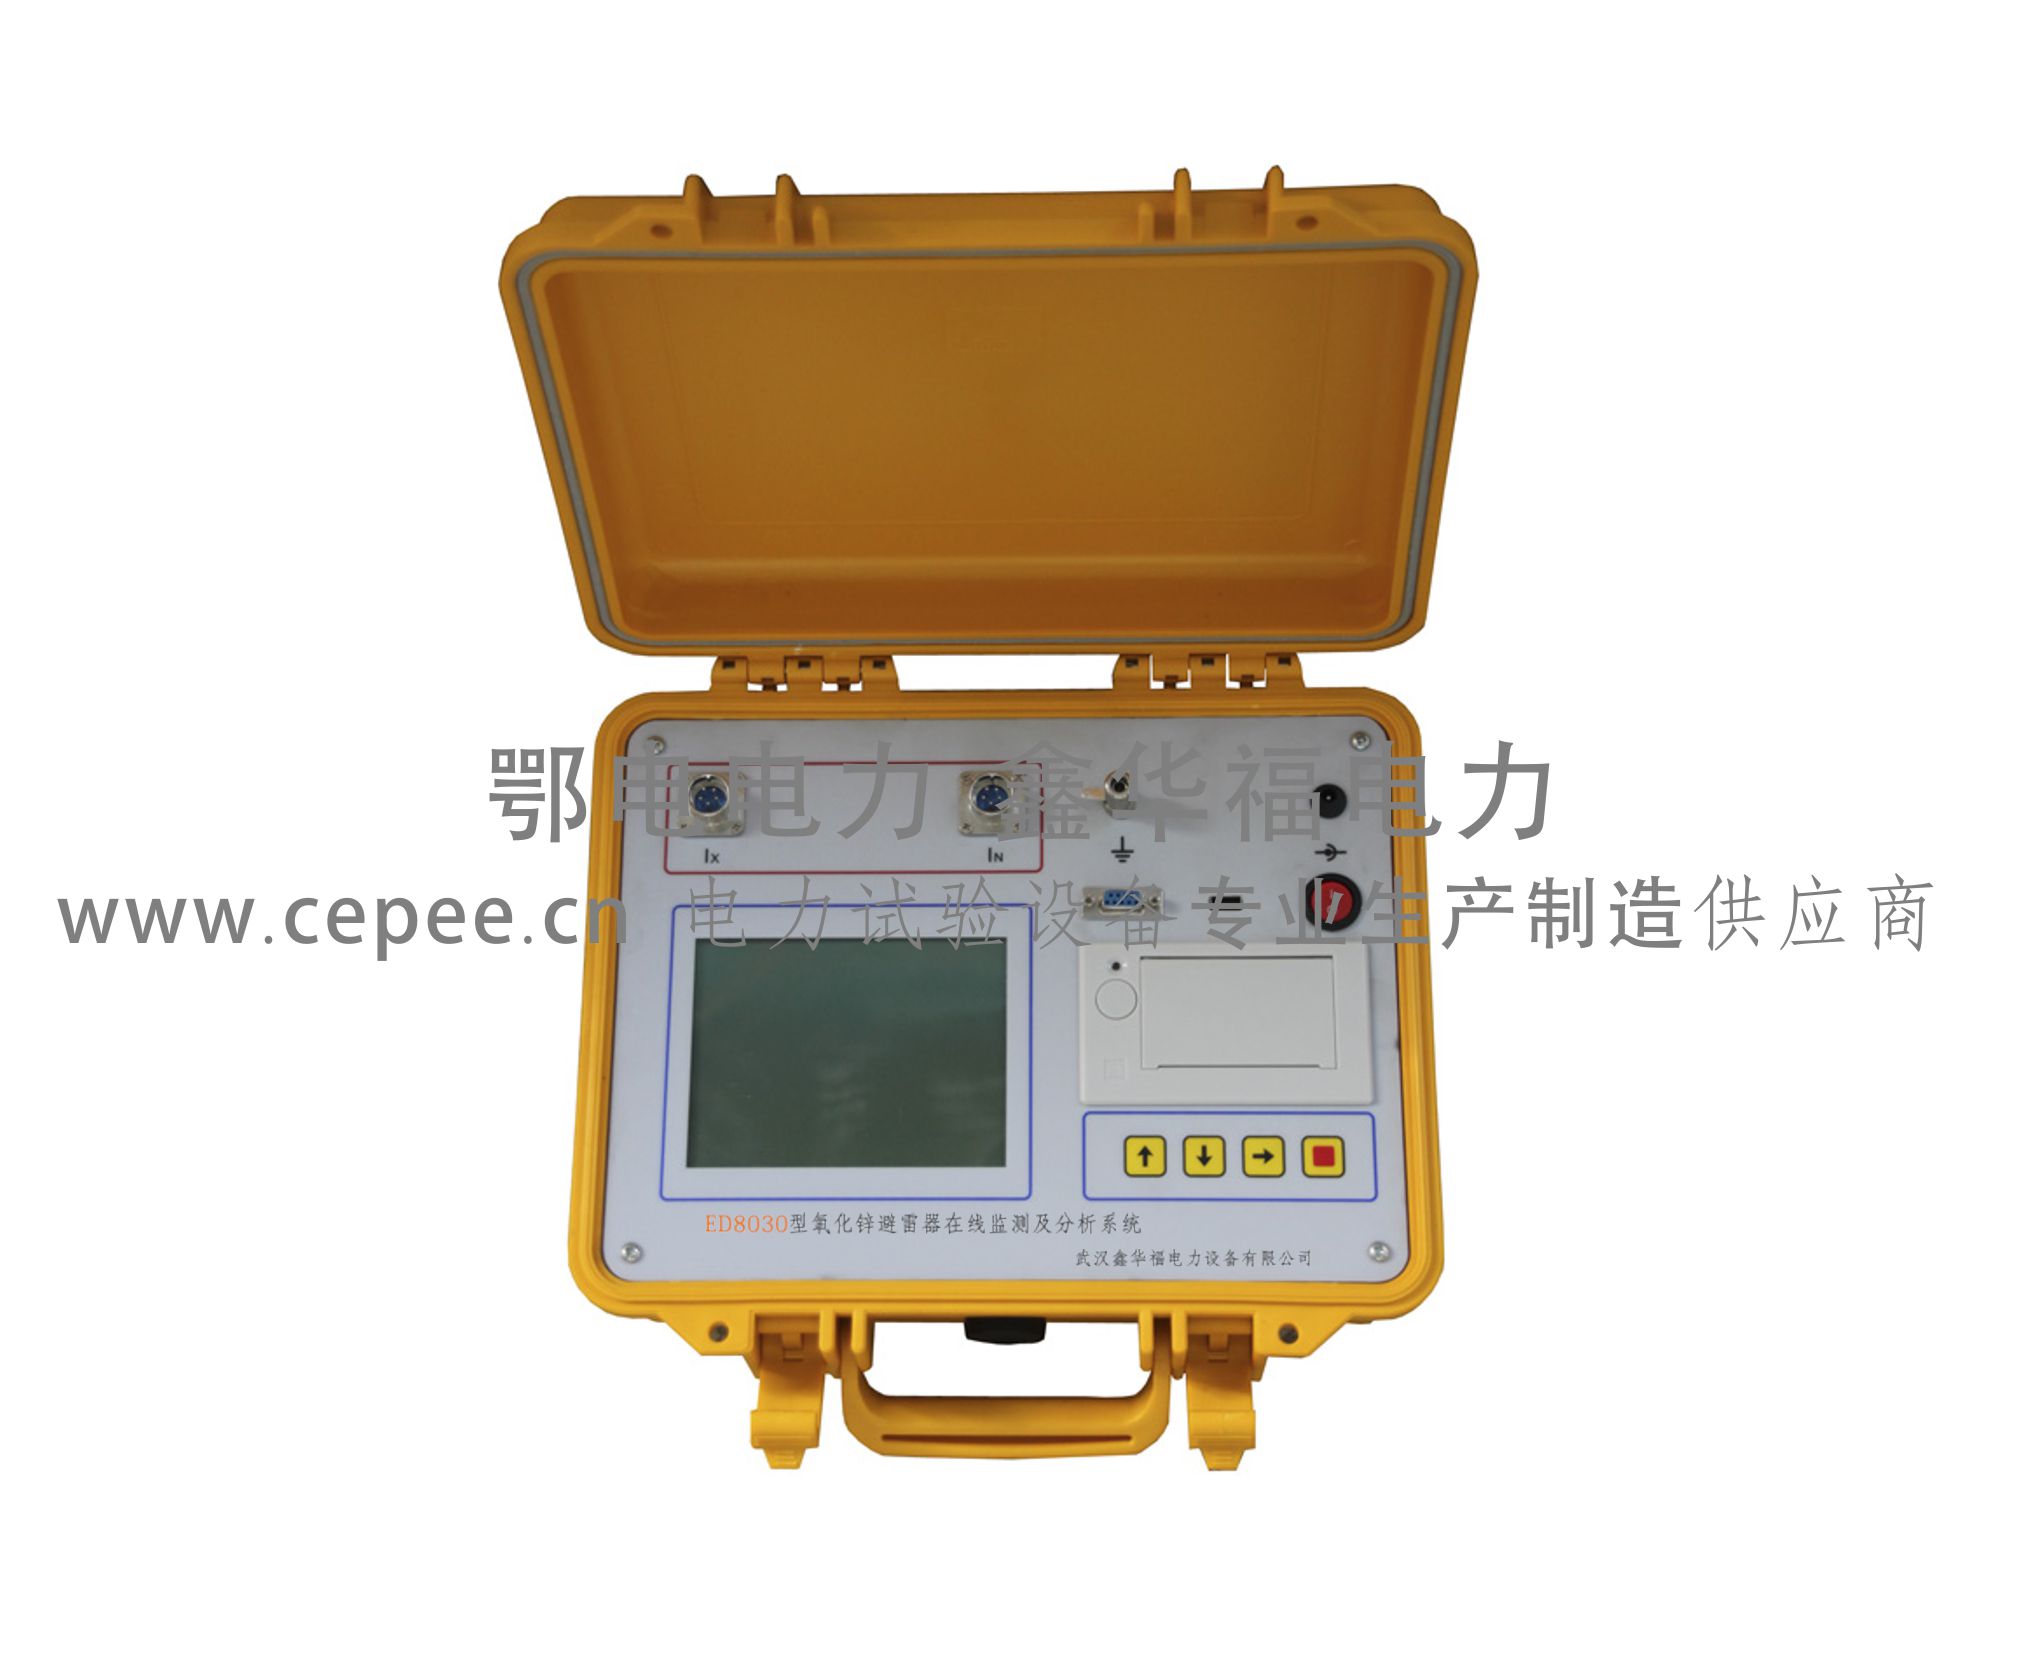 ED8030型氧化锌避雷器在线监测及分析系统图片.jpg